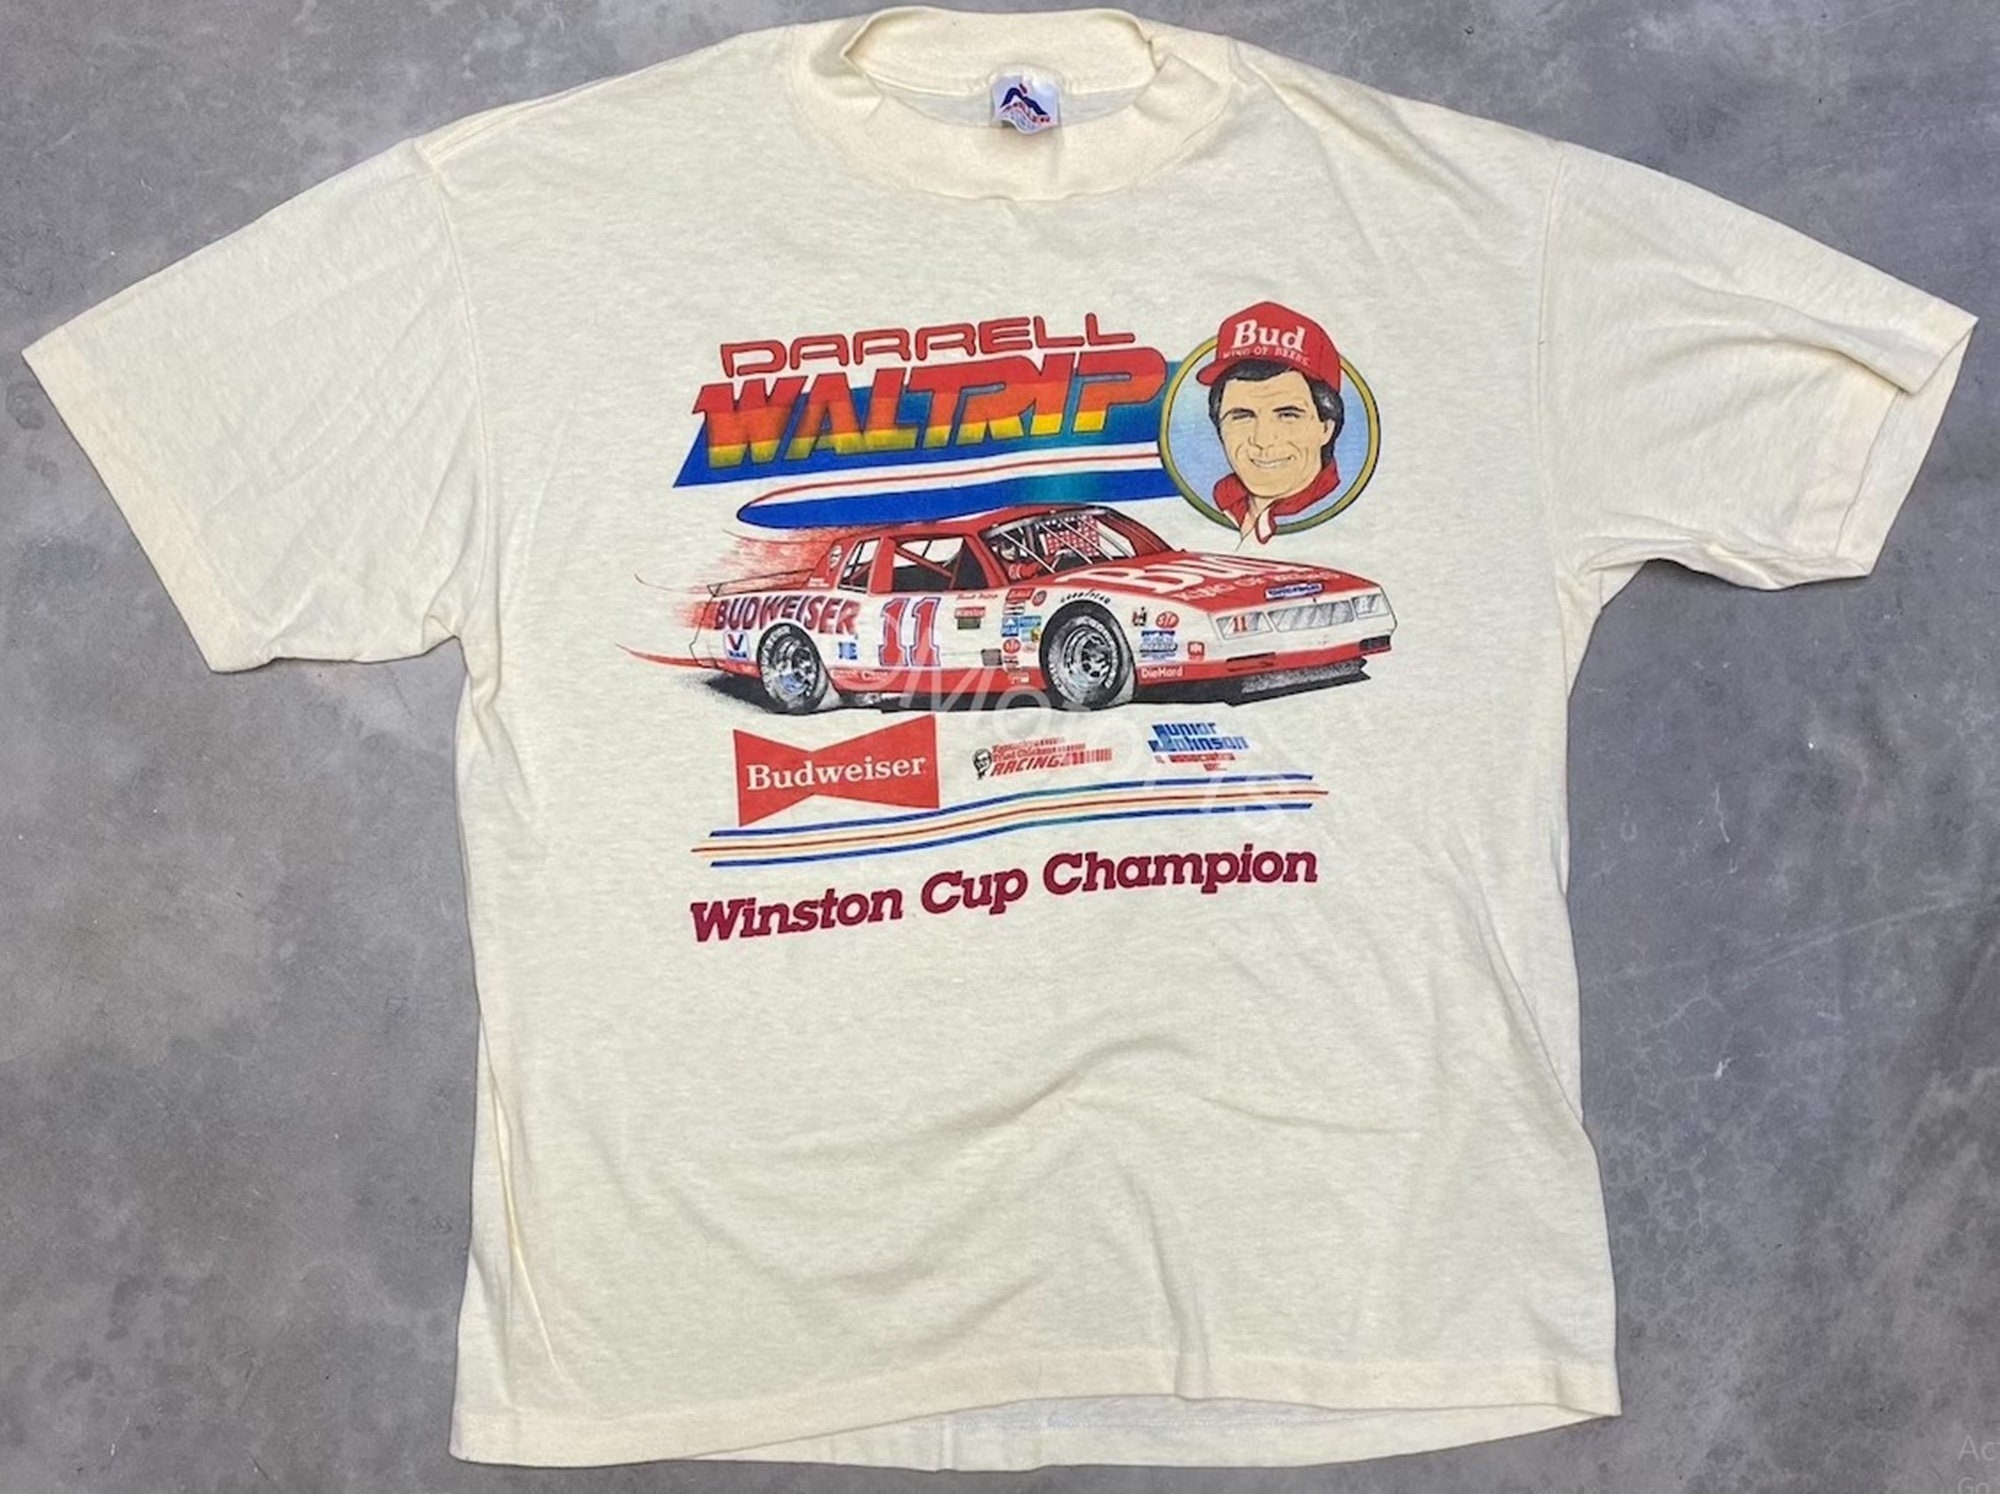 80s Style Darrell Waltrip Legend Retro Nascar Car Racing shirt - Kingteeshop